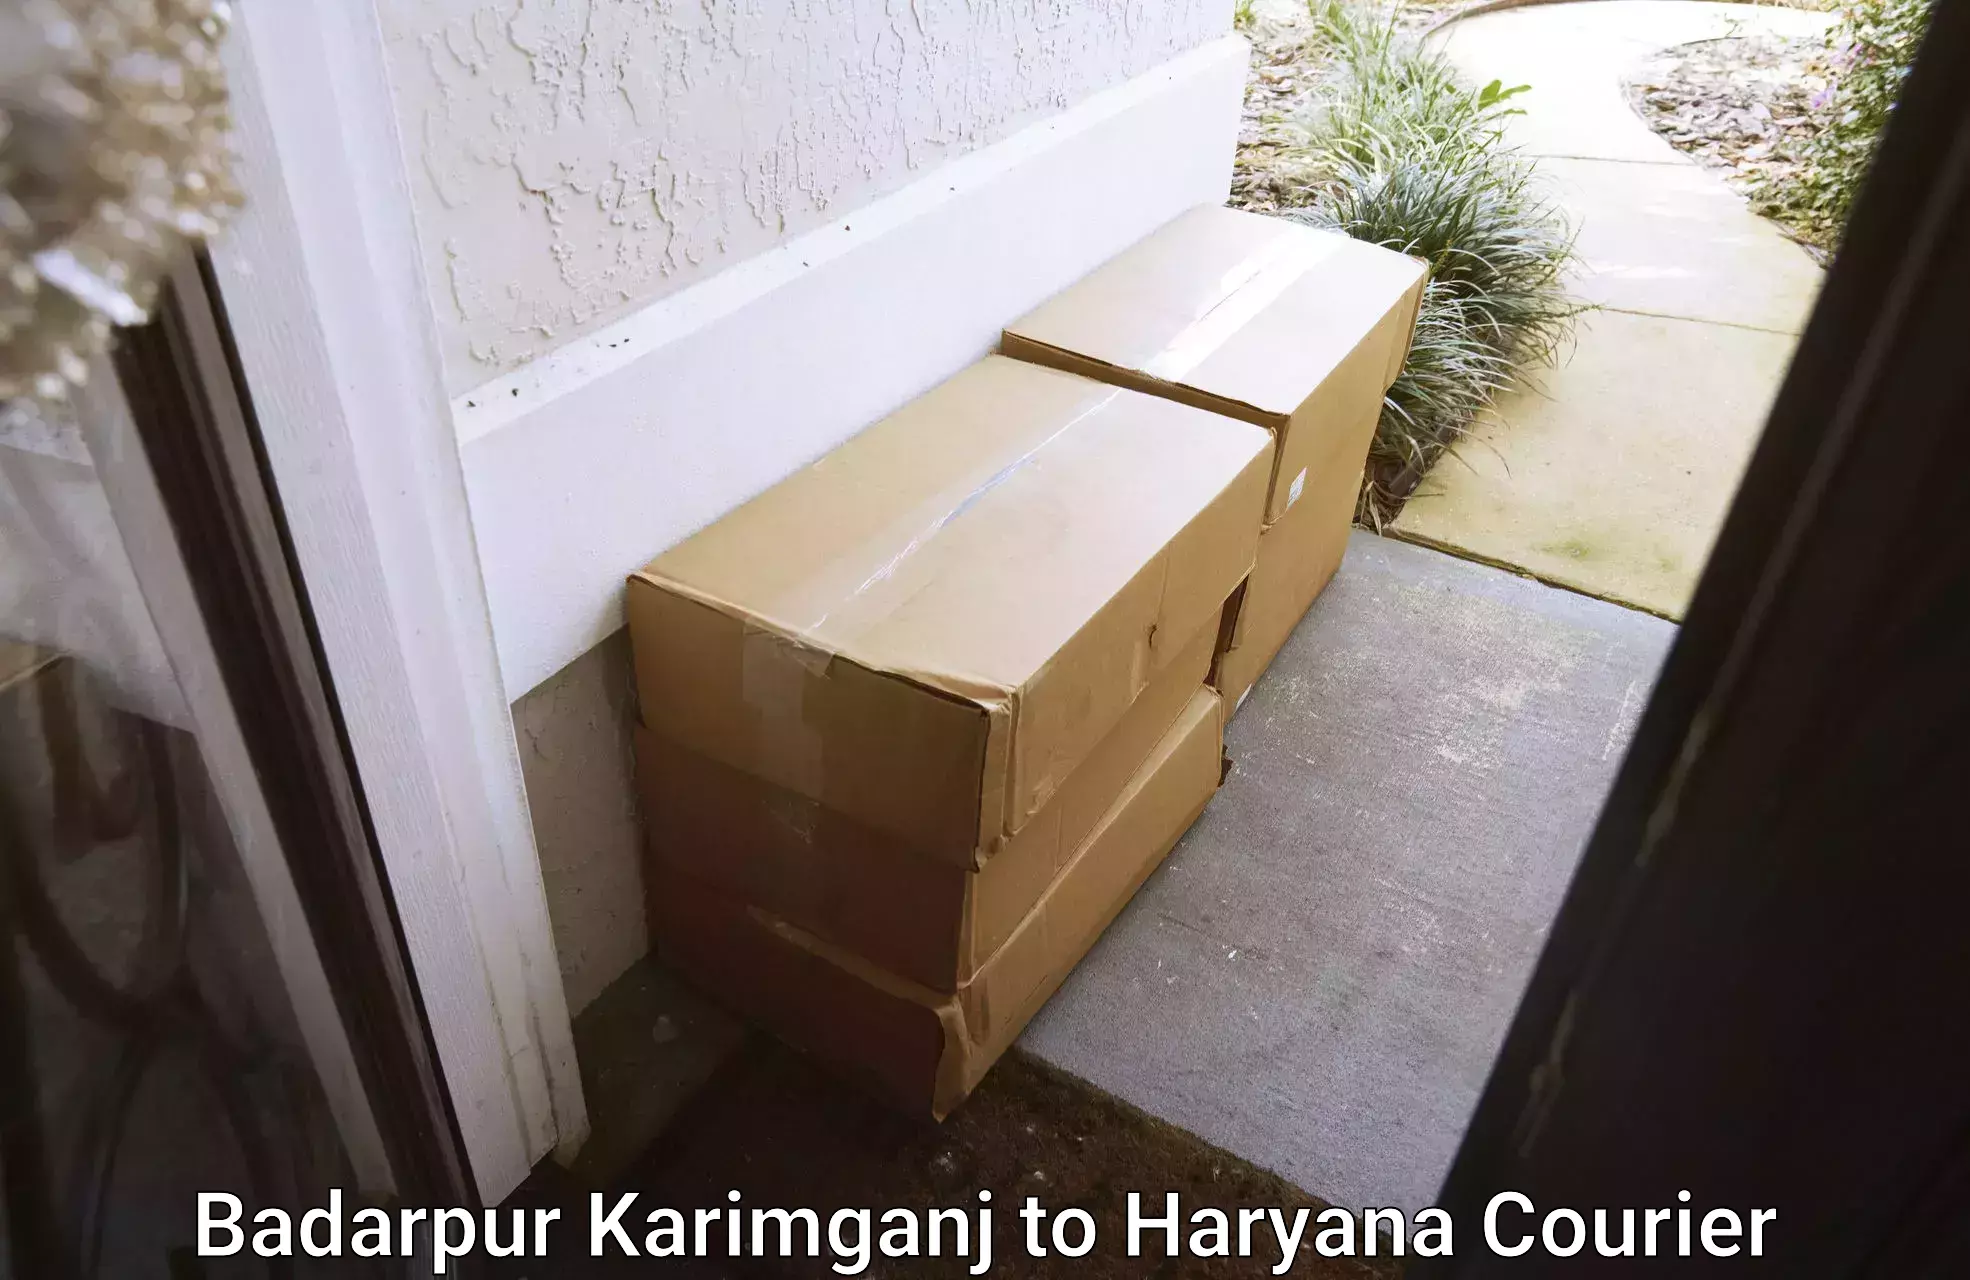 Nationwide delivery network Badarpur Karimganj to Bhiwani